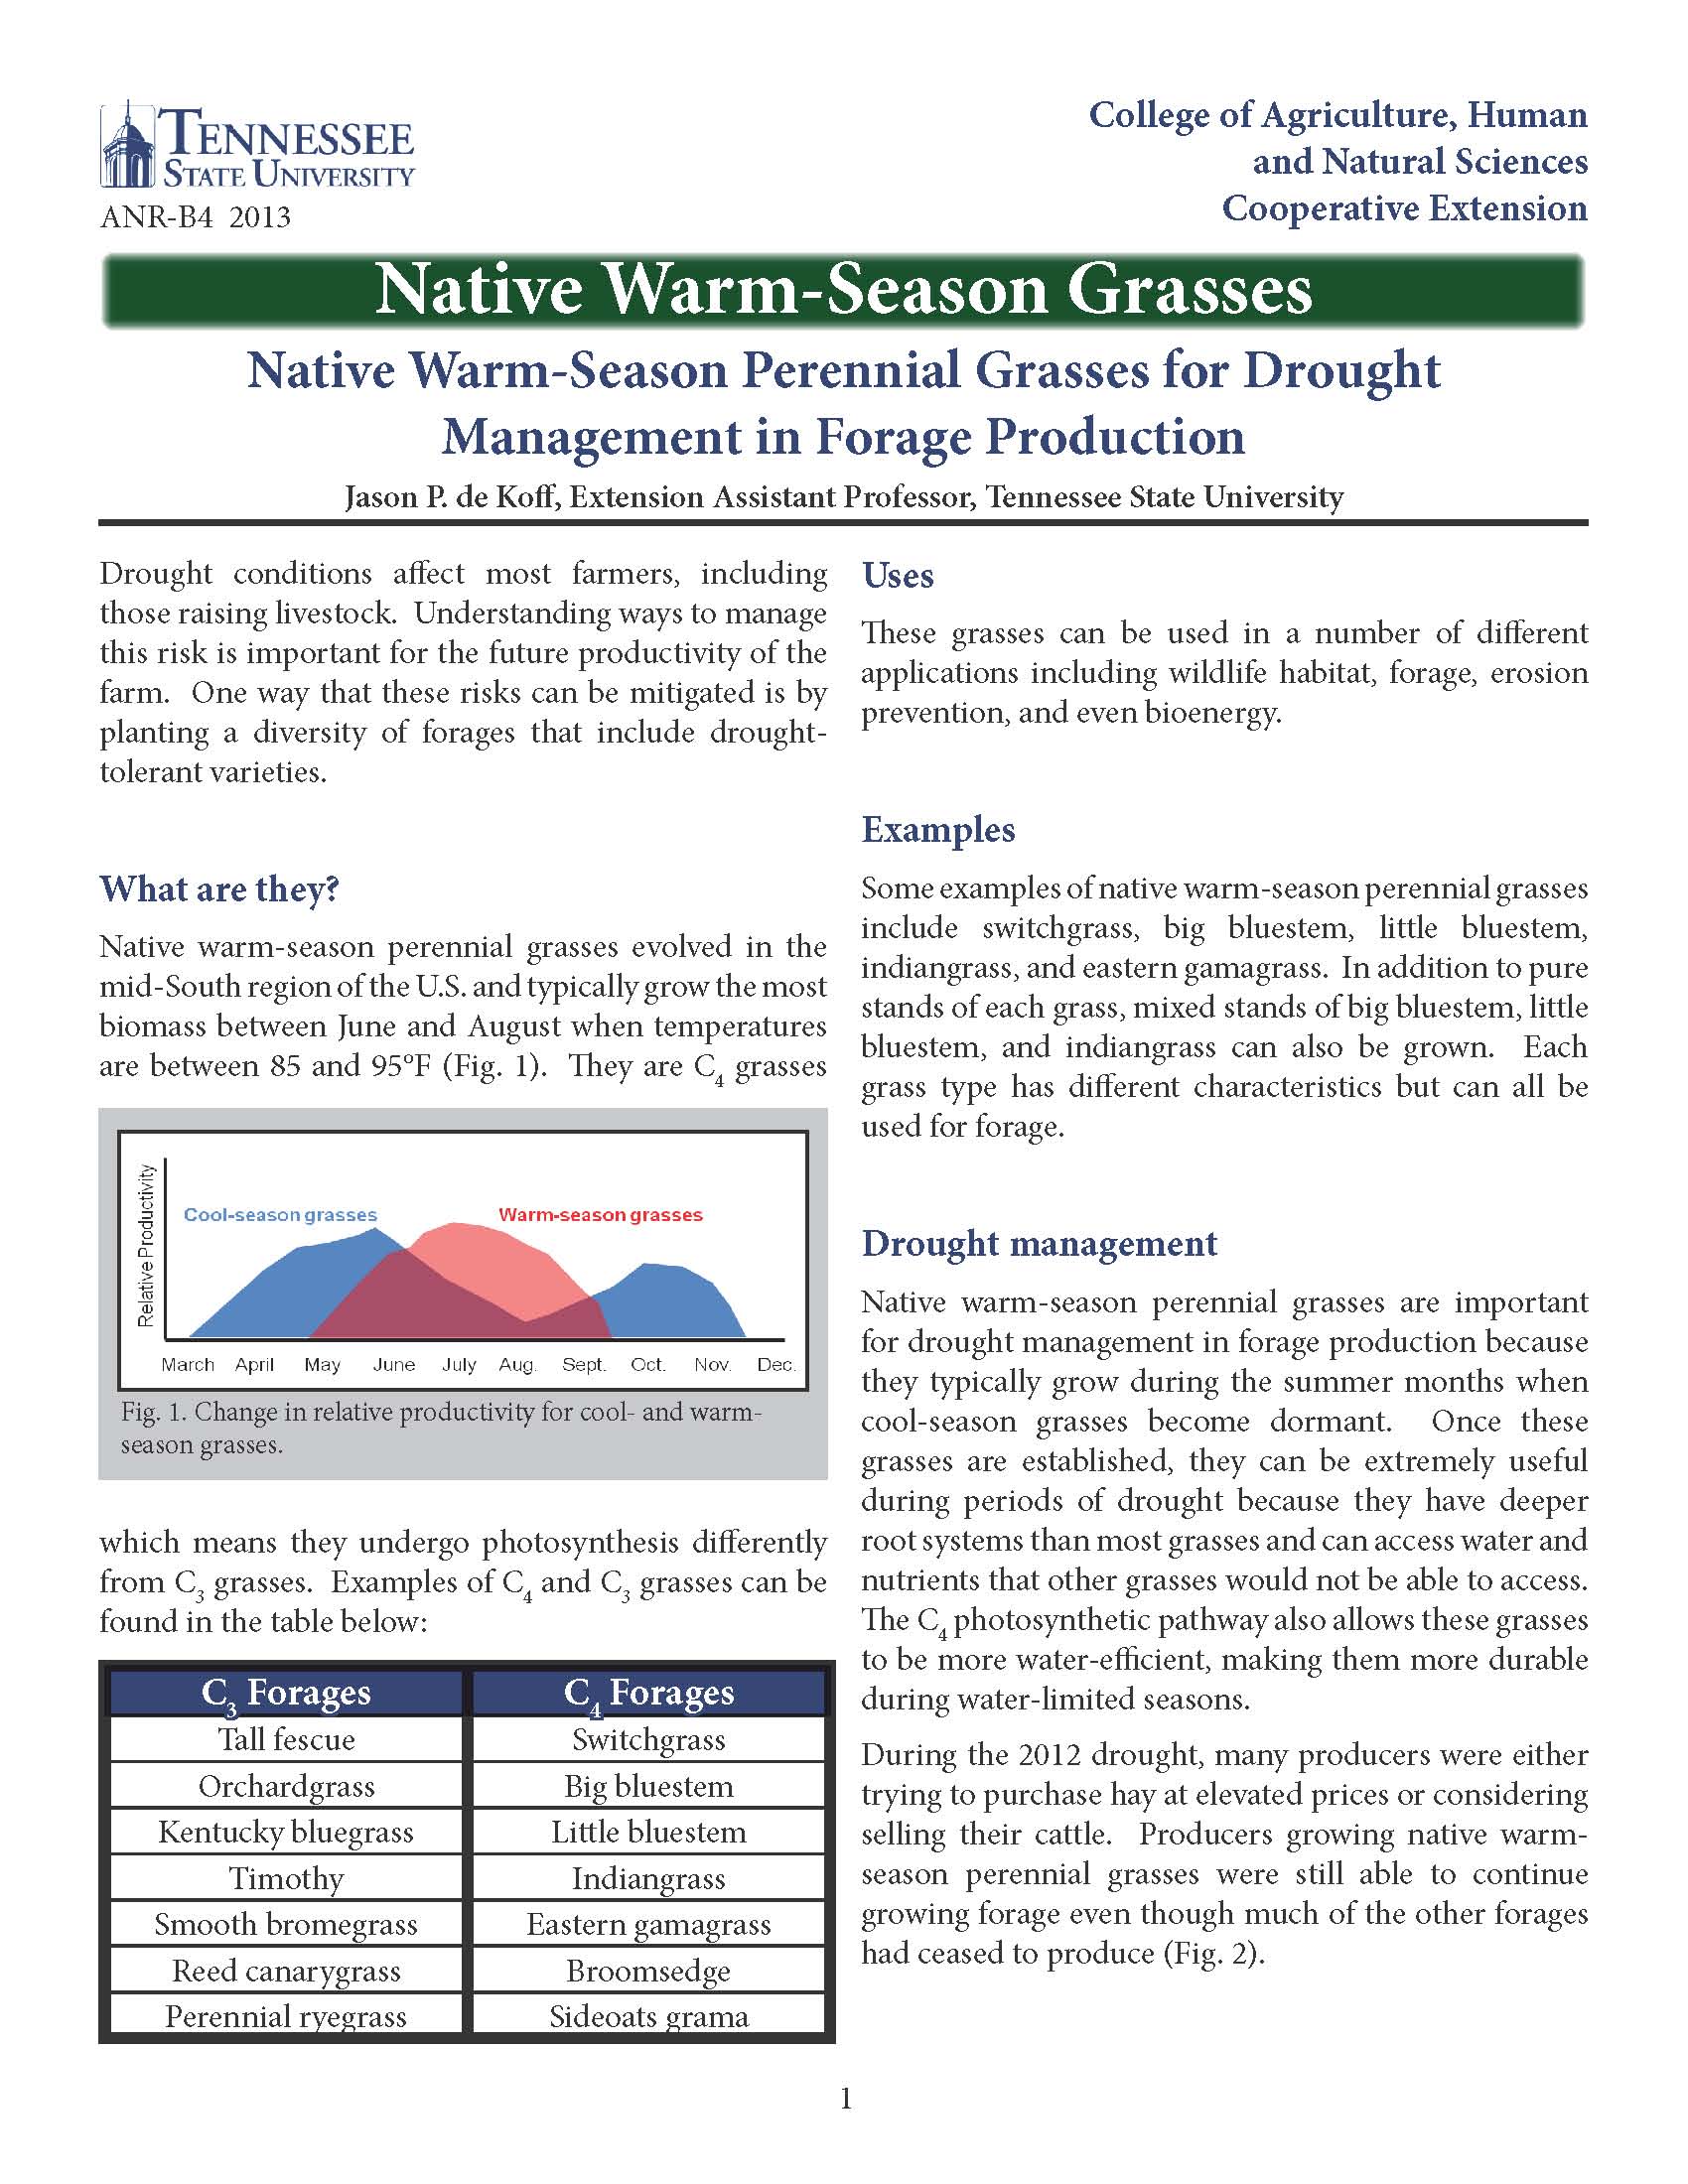 Native Warm-season grasses